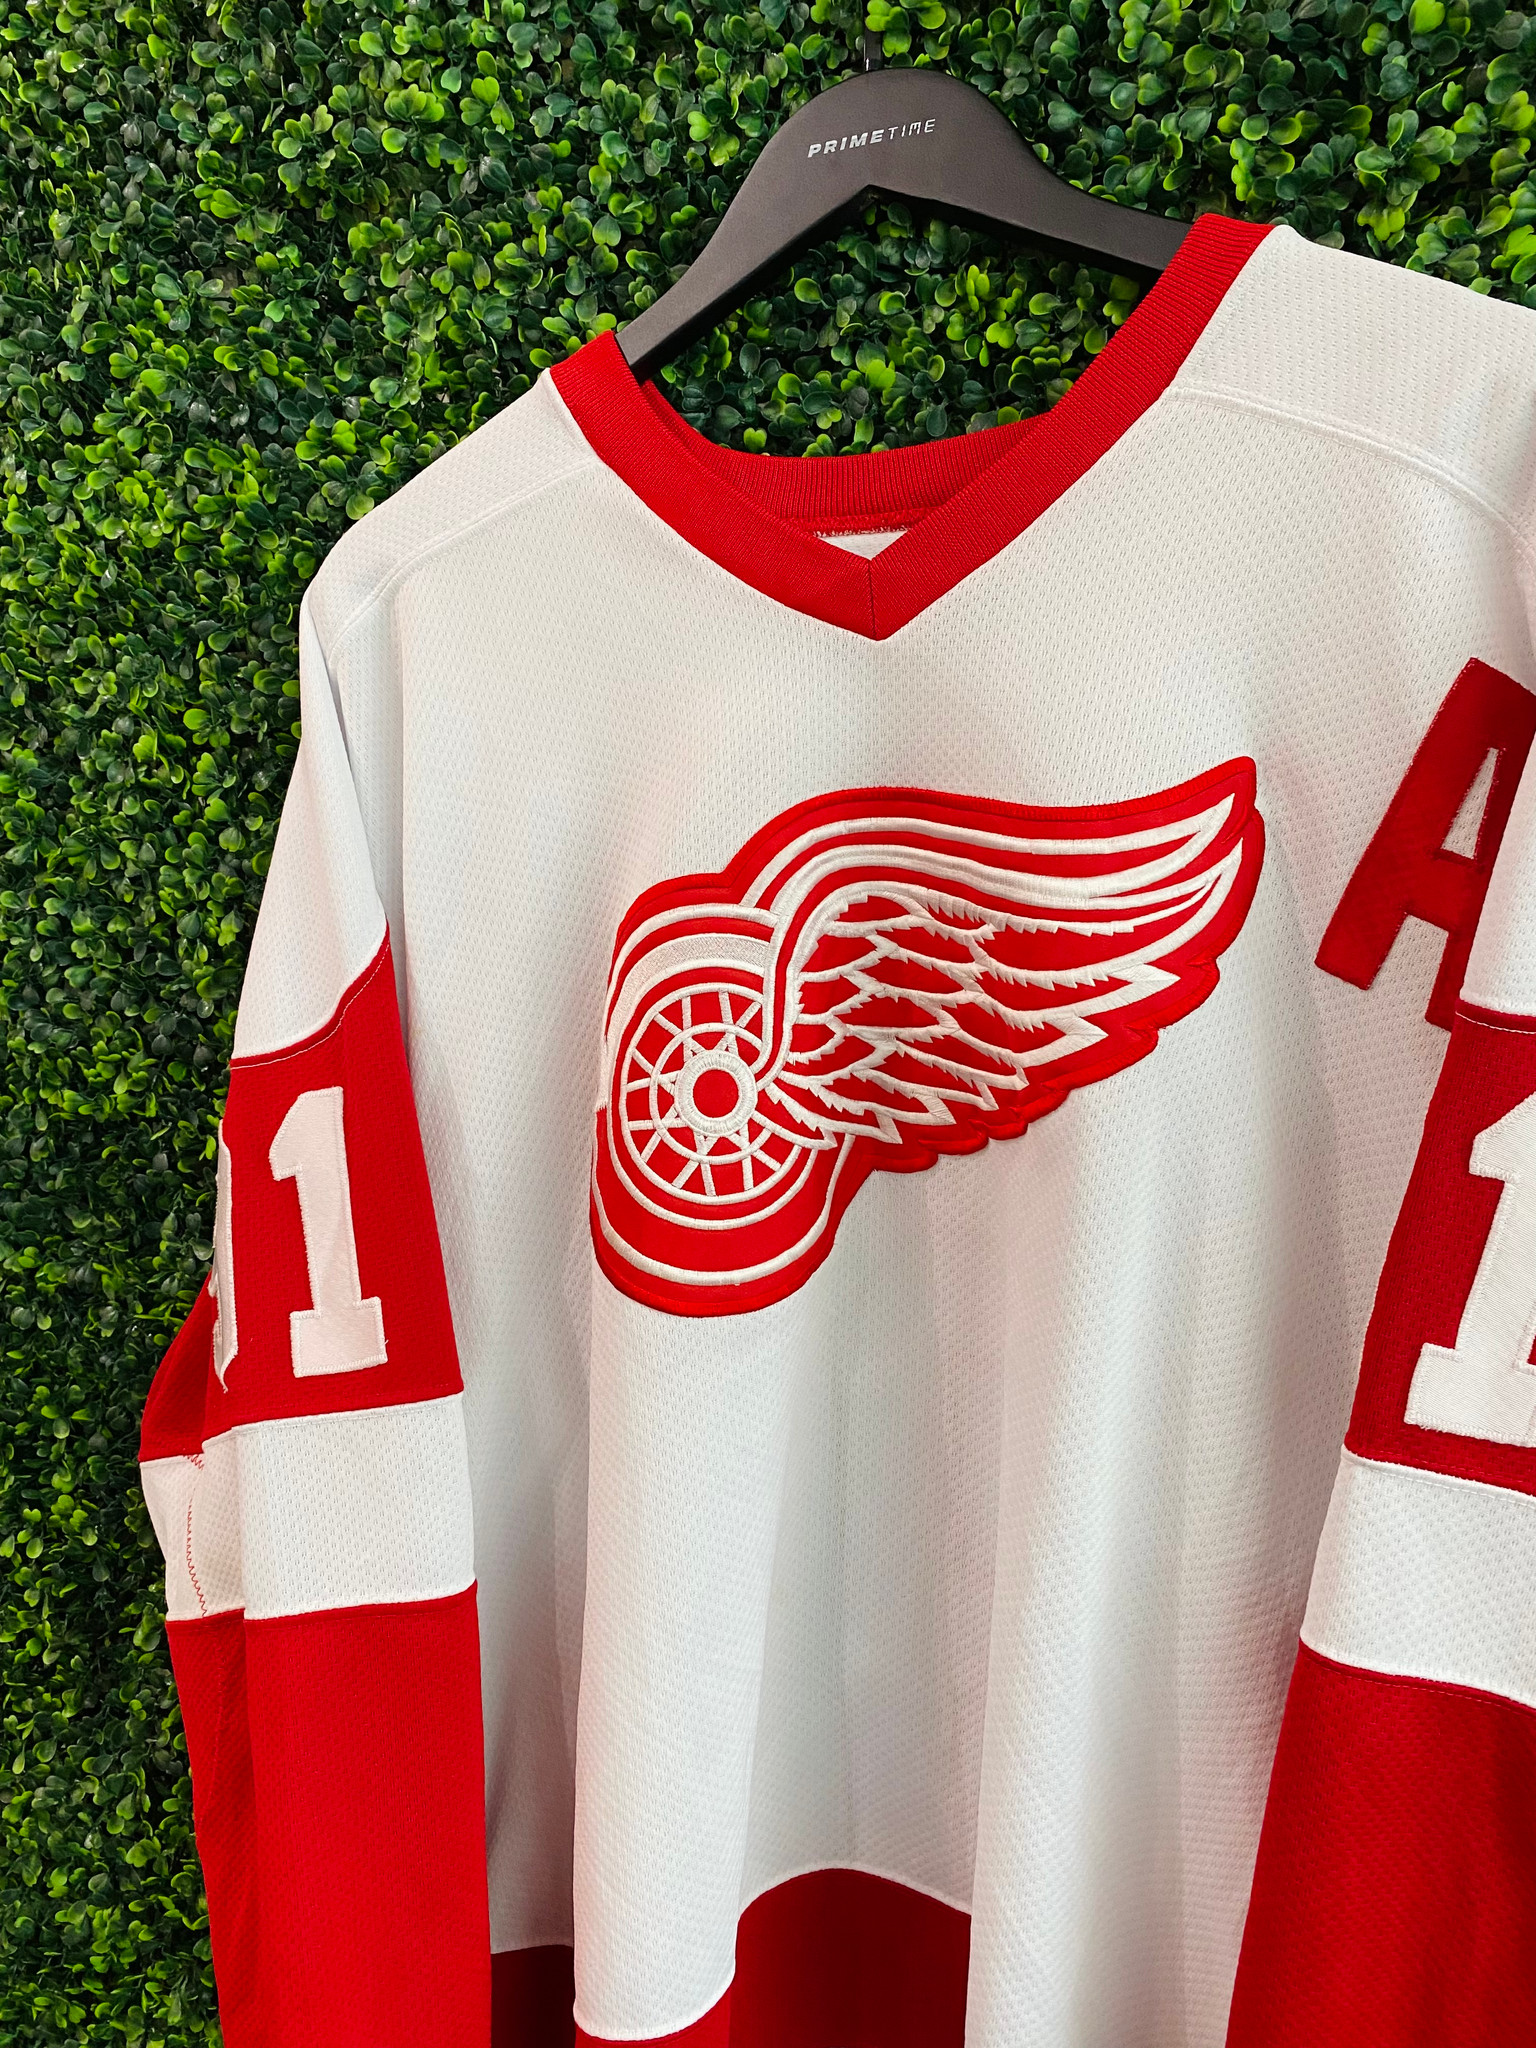 STARTER, Shirts & Tops, Vintage Starter Detroit Red Wings Hockey Jersey M